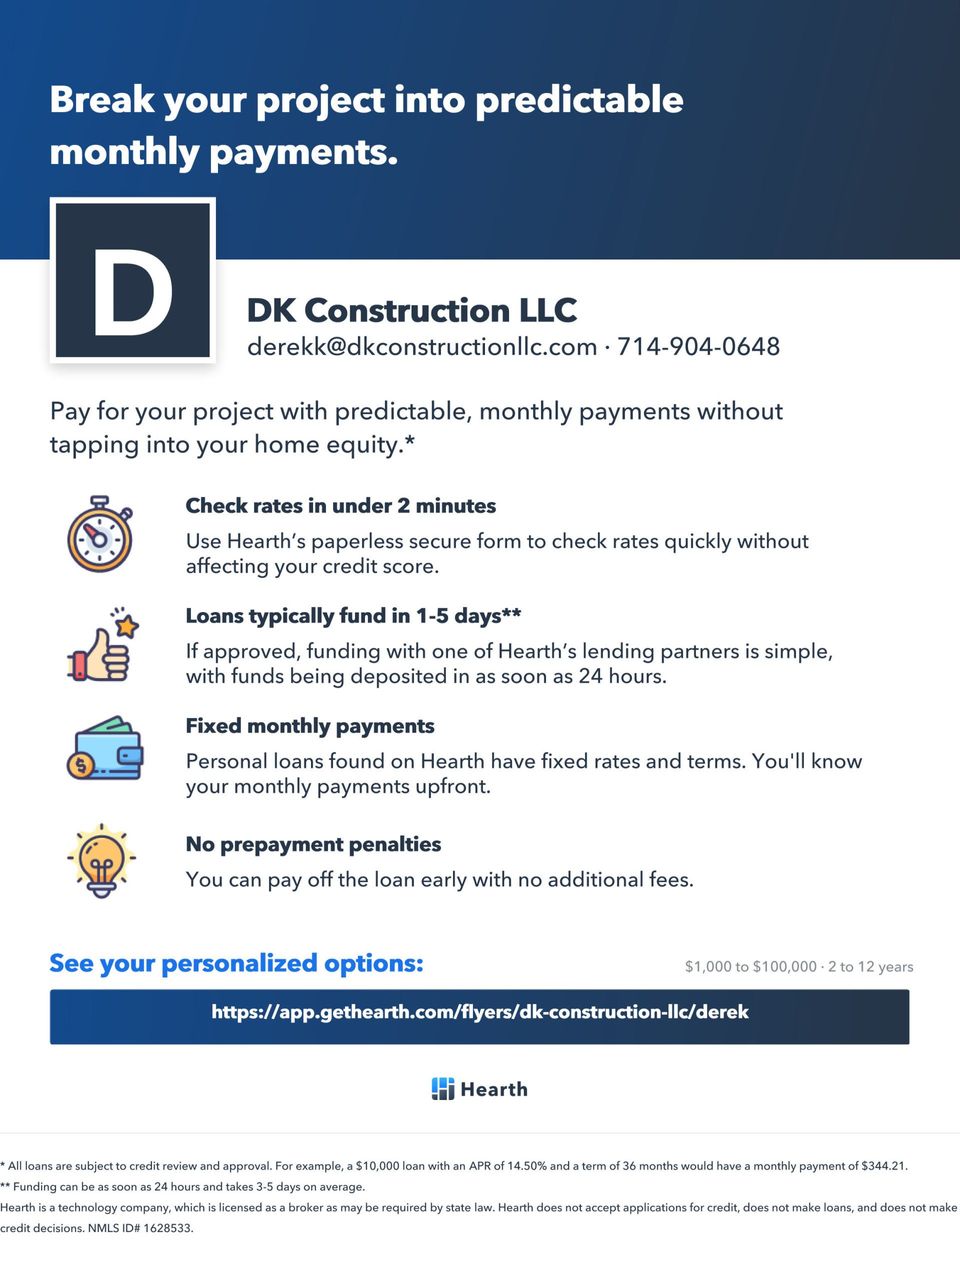 DK Construction, LLC Photo